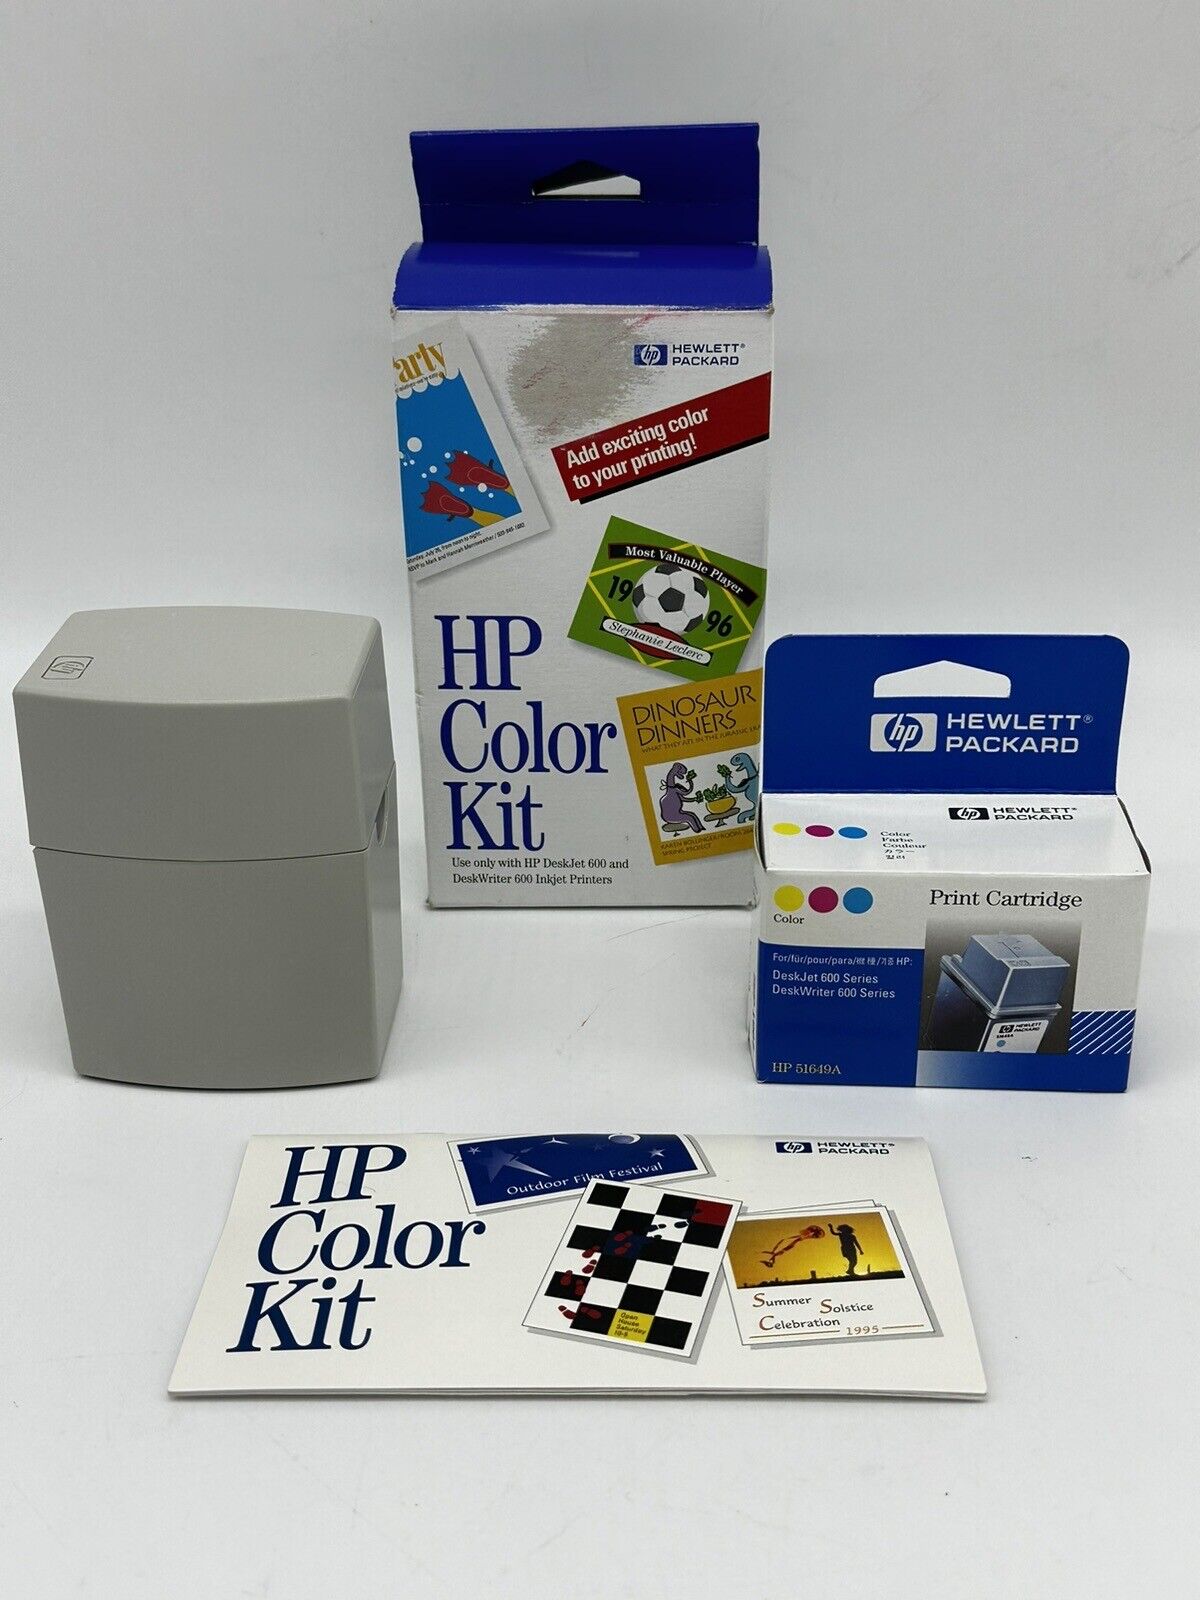 HP Color Kit Ink C51649A Desk Jet/Writer 600 w/Storage Container Exp: 9/97 L@@K